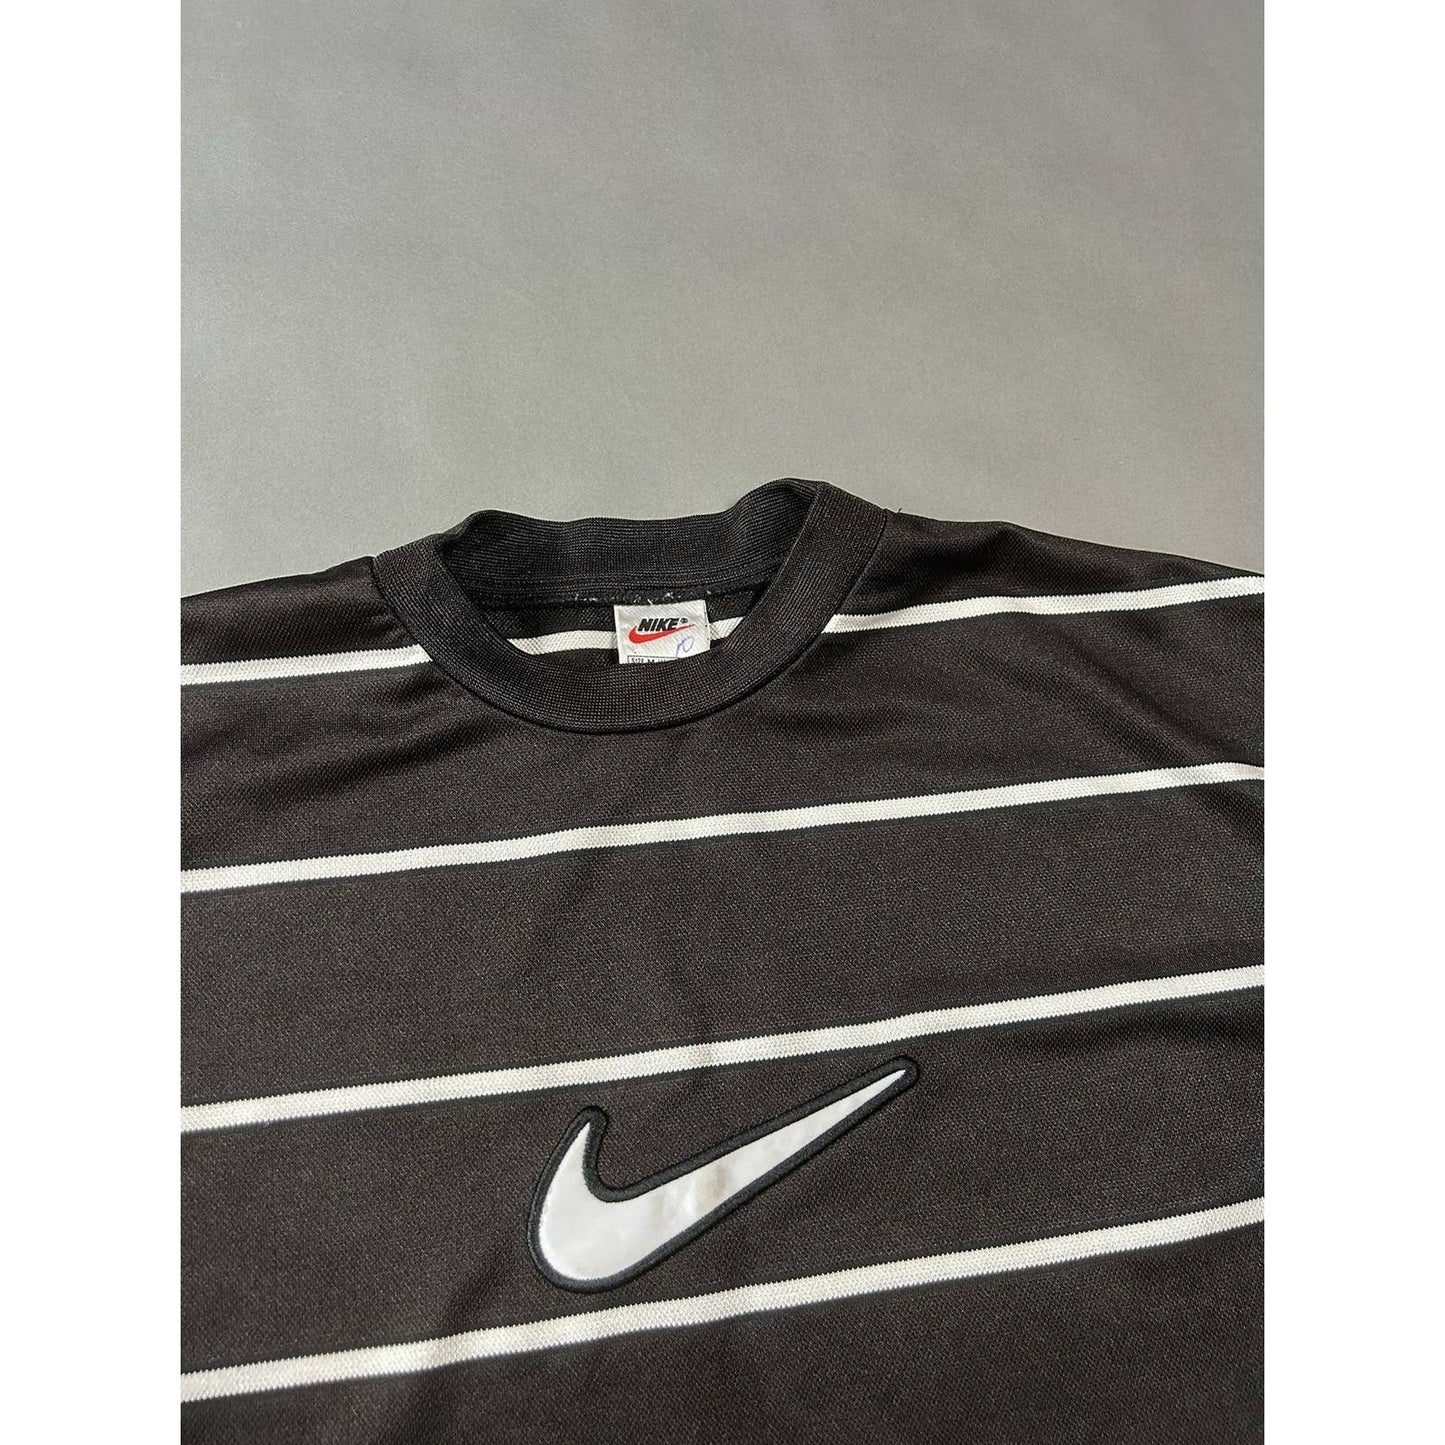 Nike big swoosh striped t-shirt vintage 90s black